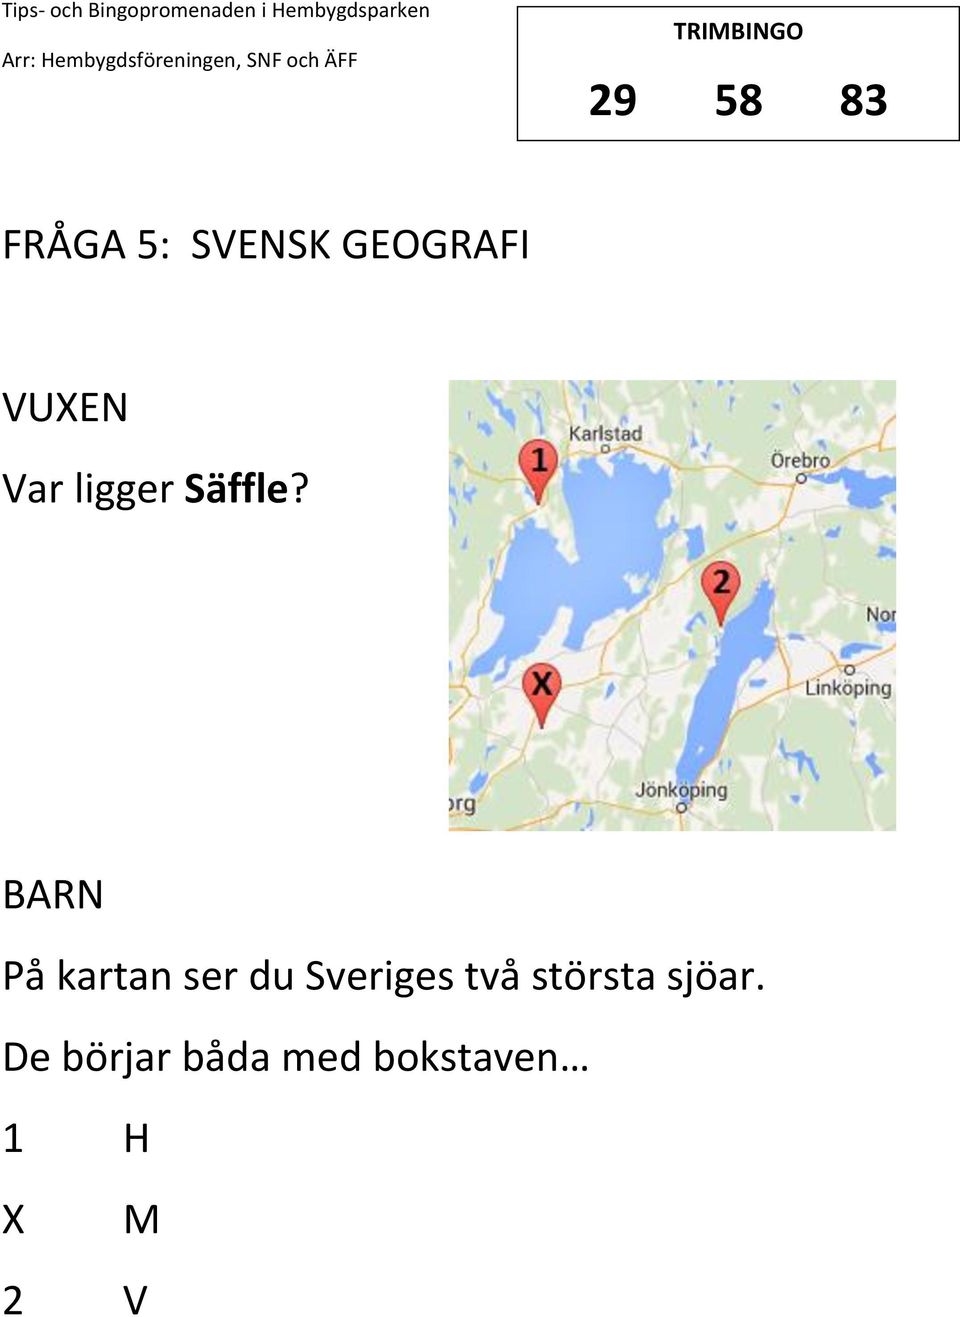 På kartan ser du Sveriges två